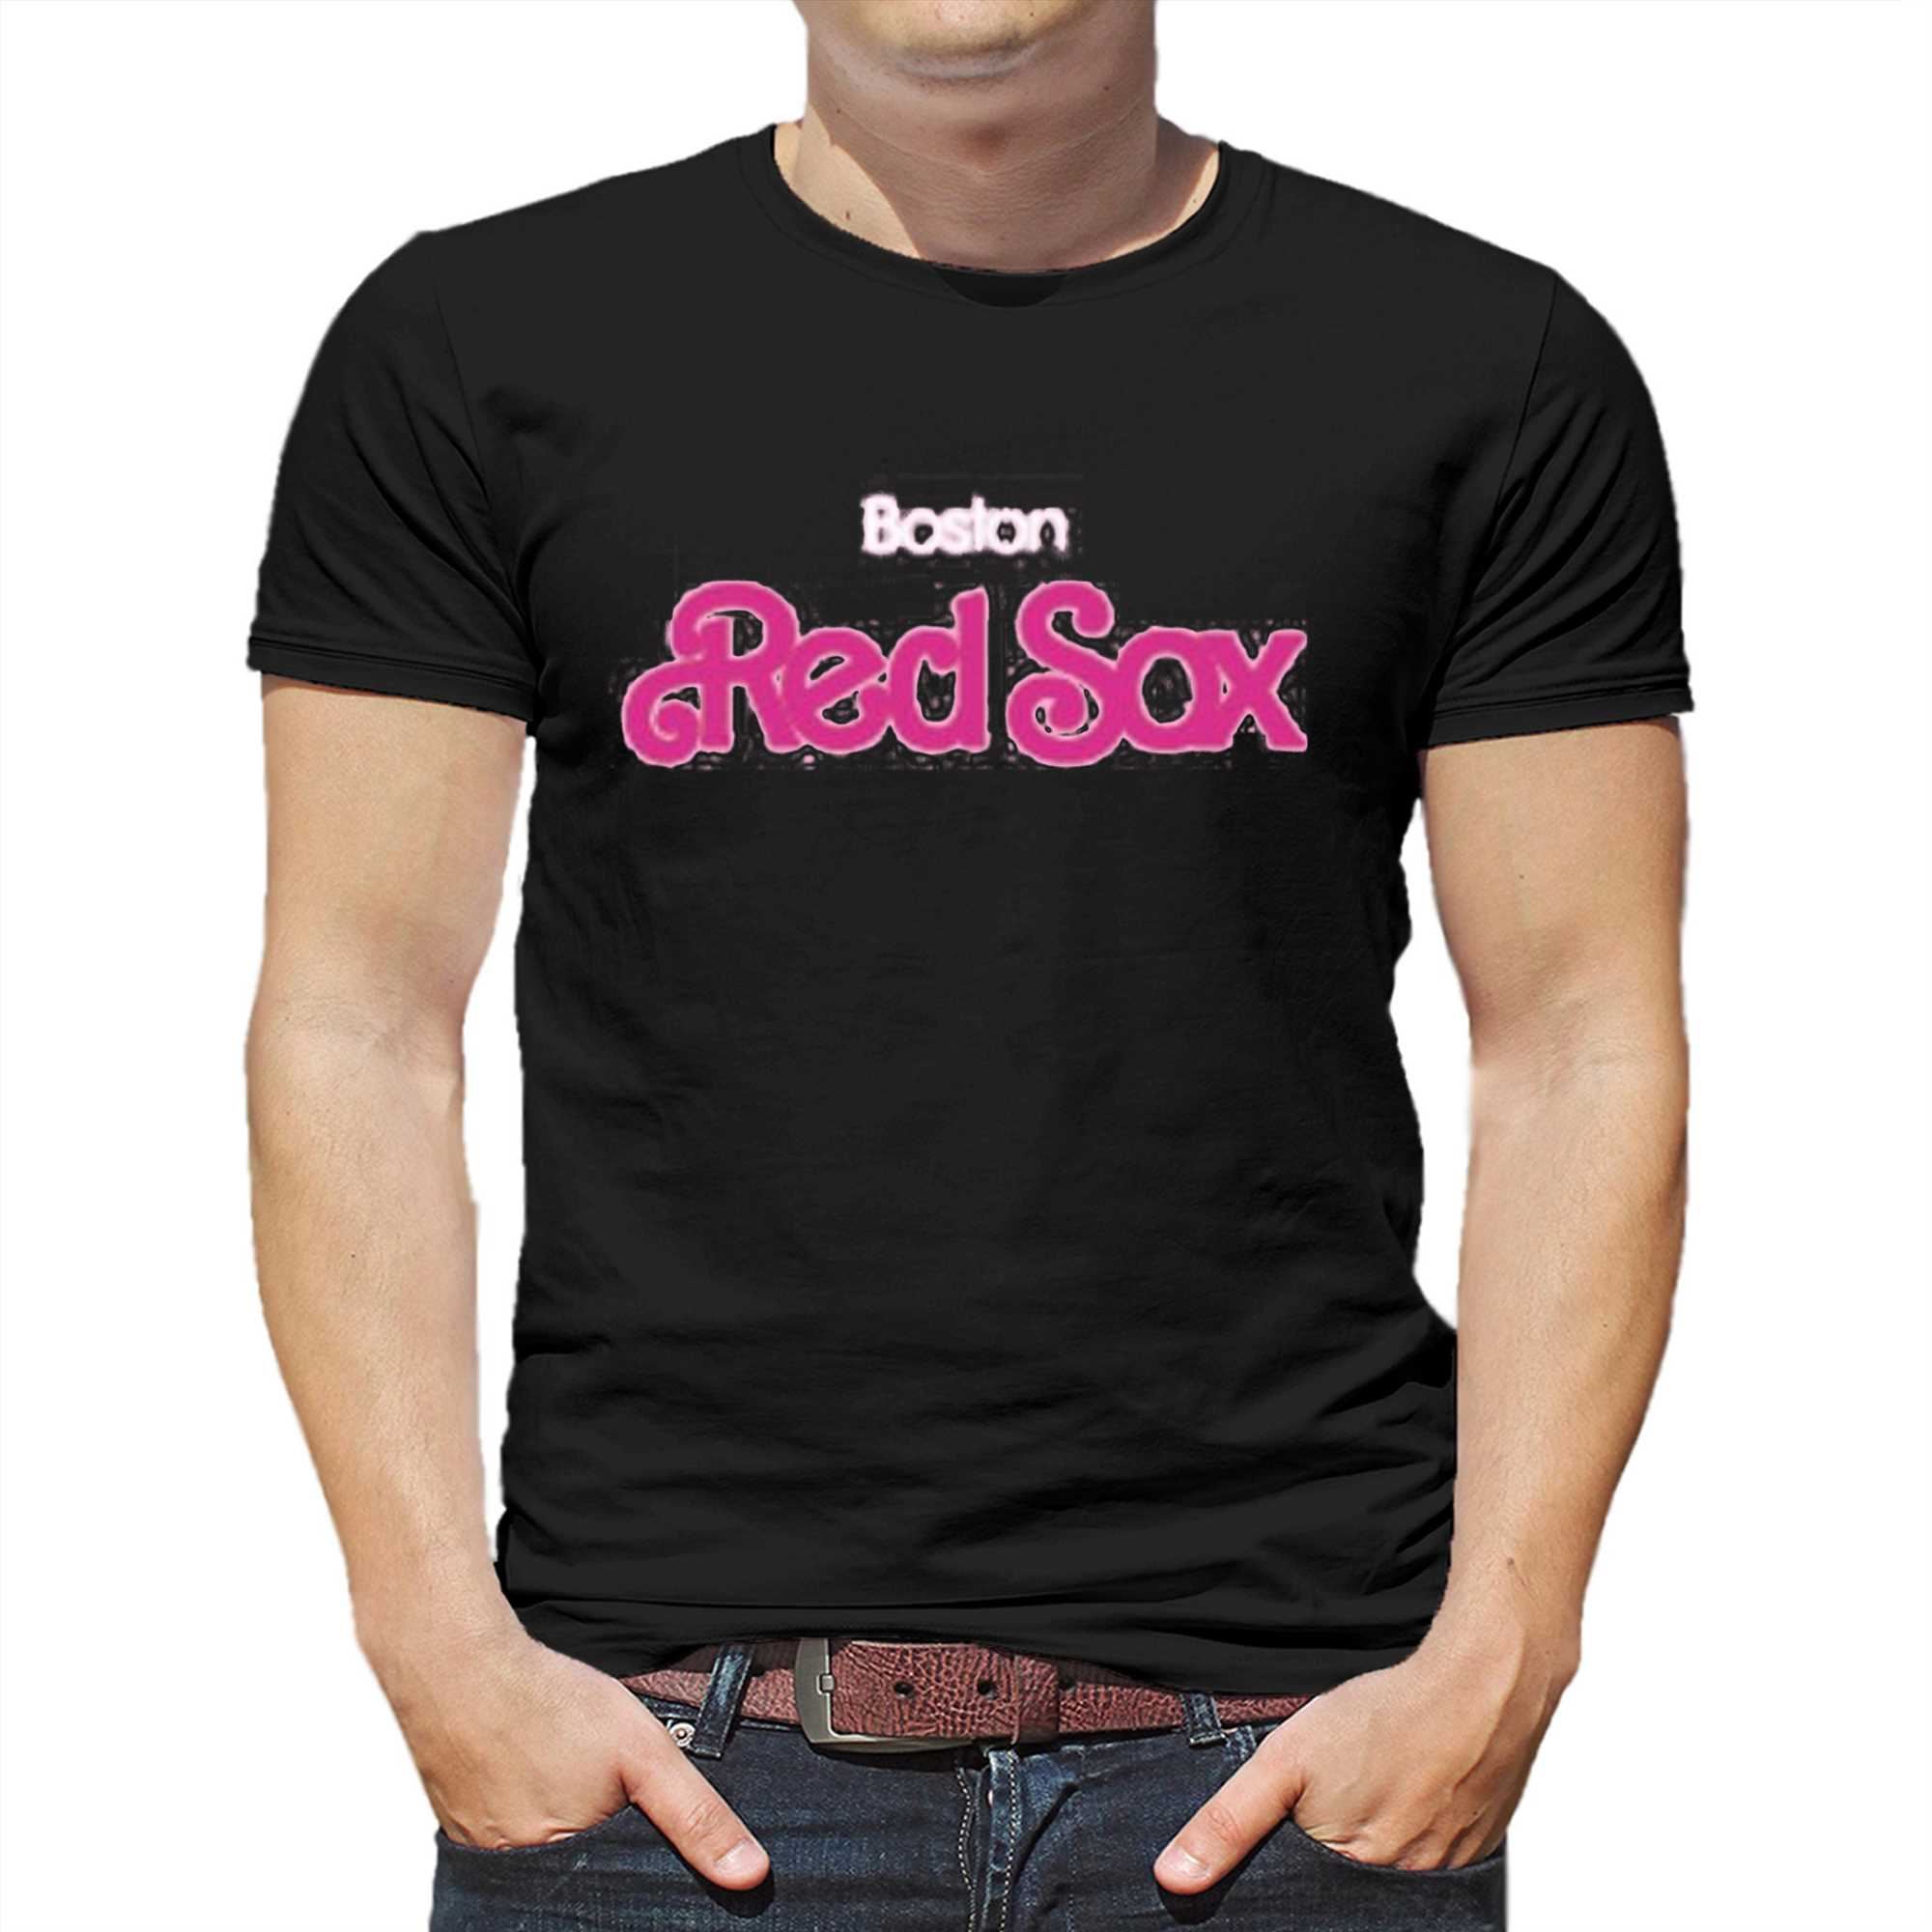 Barbie Night Kenway Park Boston Red Sox Shirt - Ipeepz